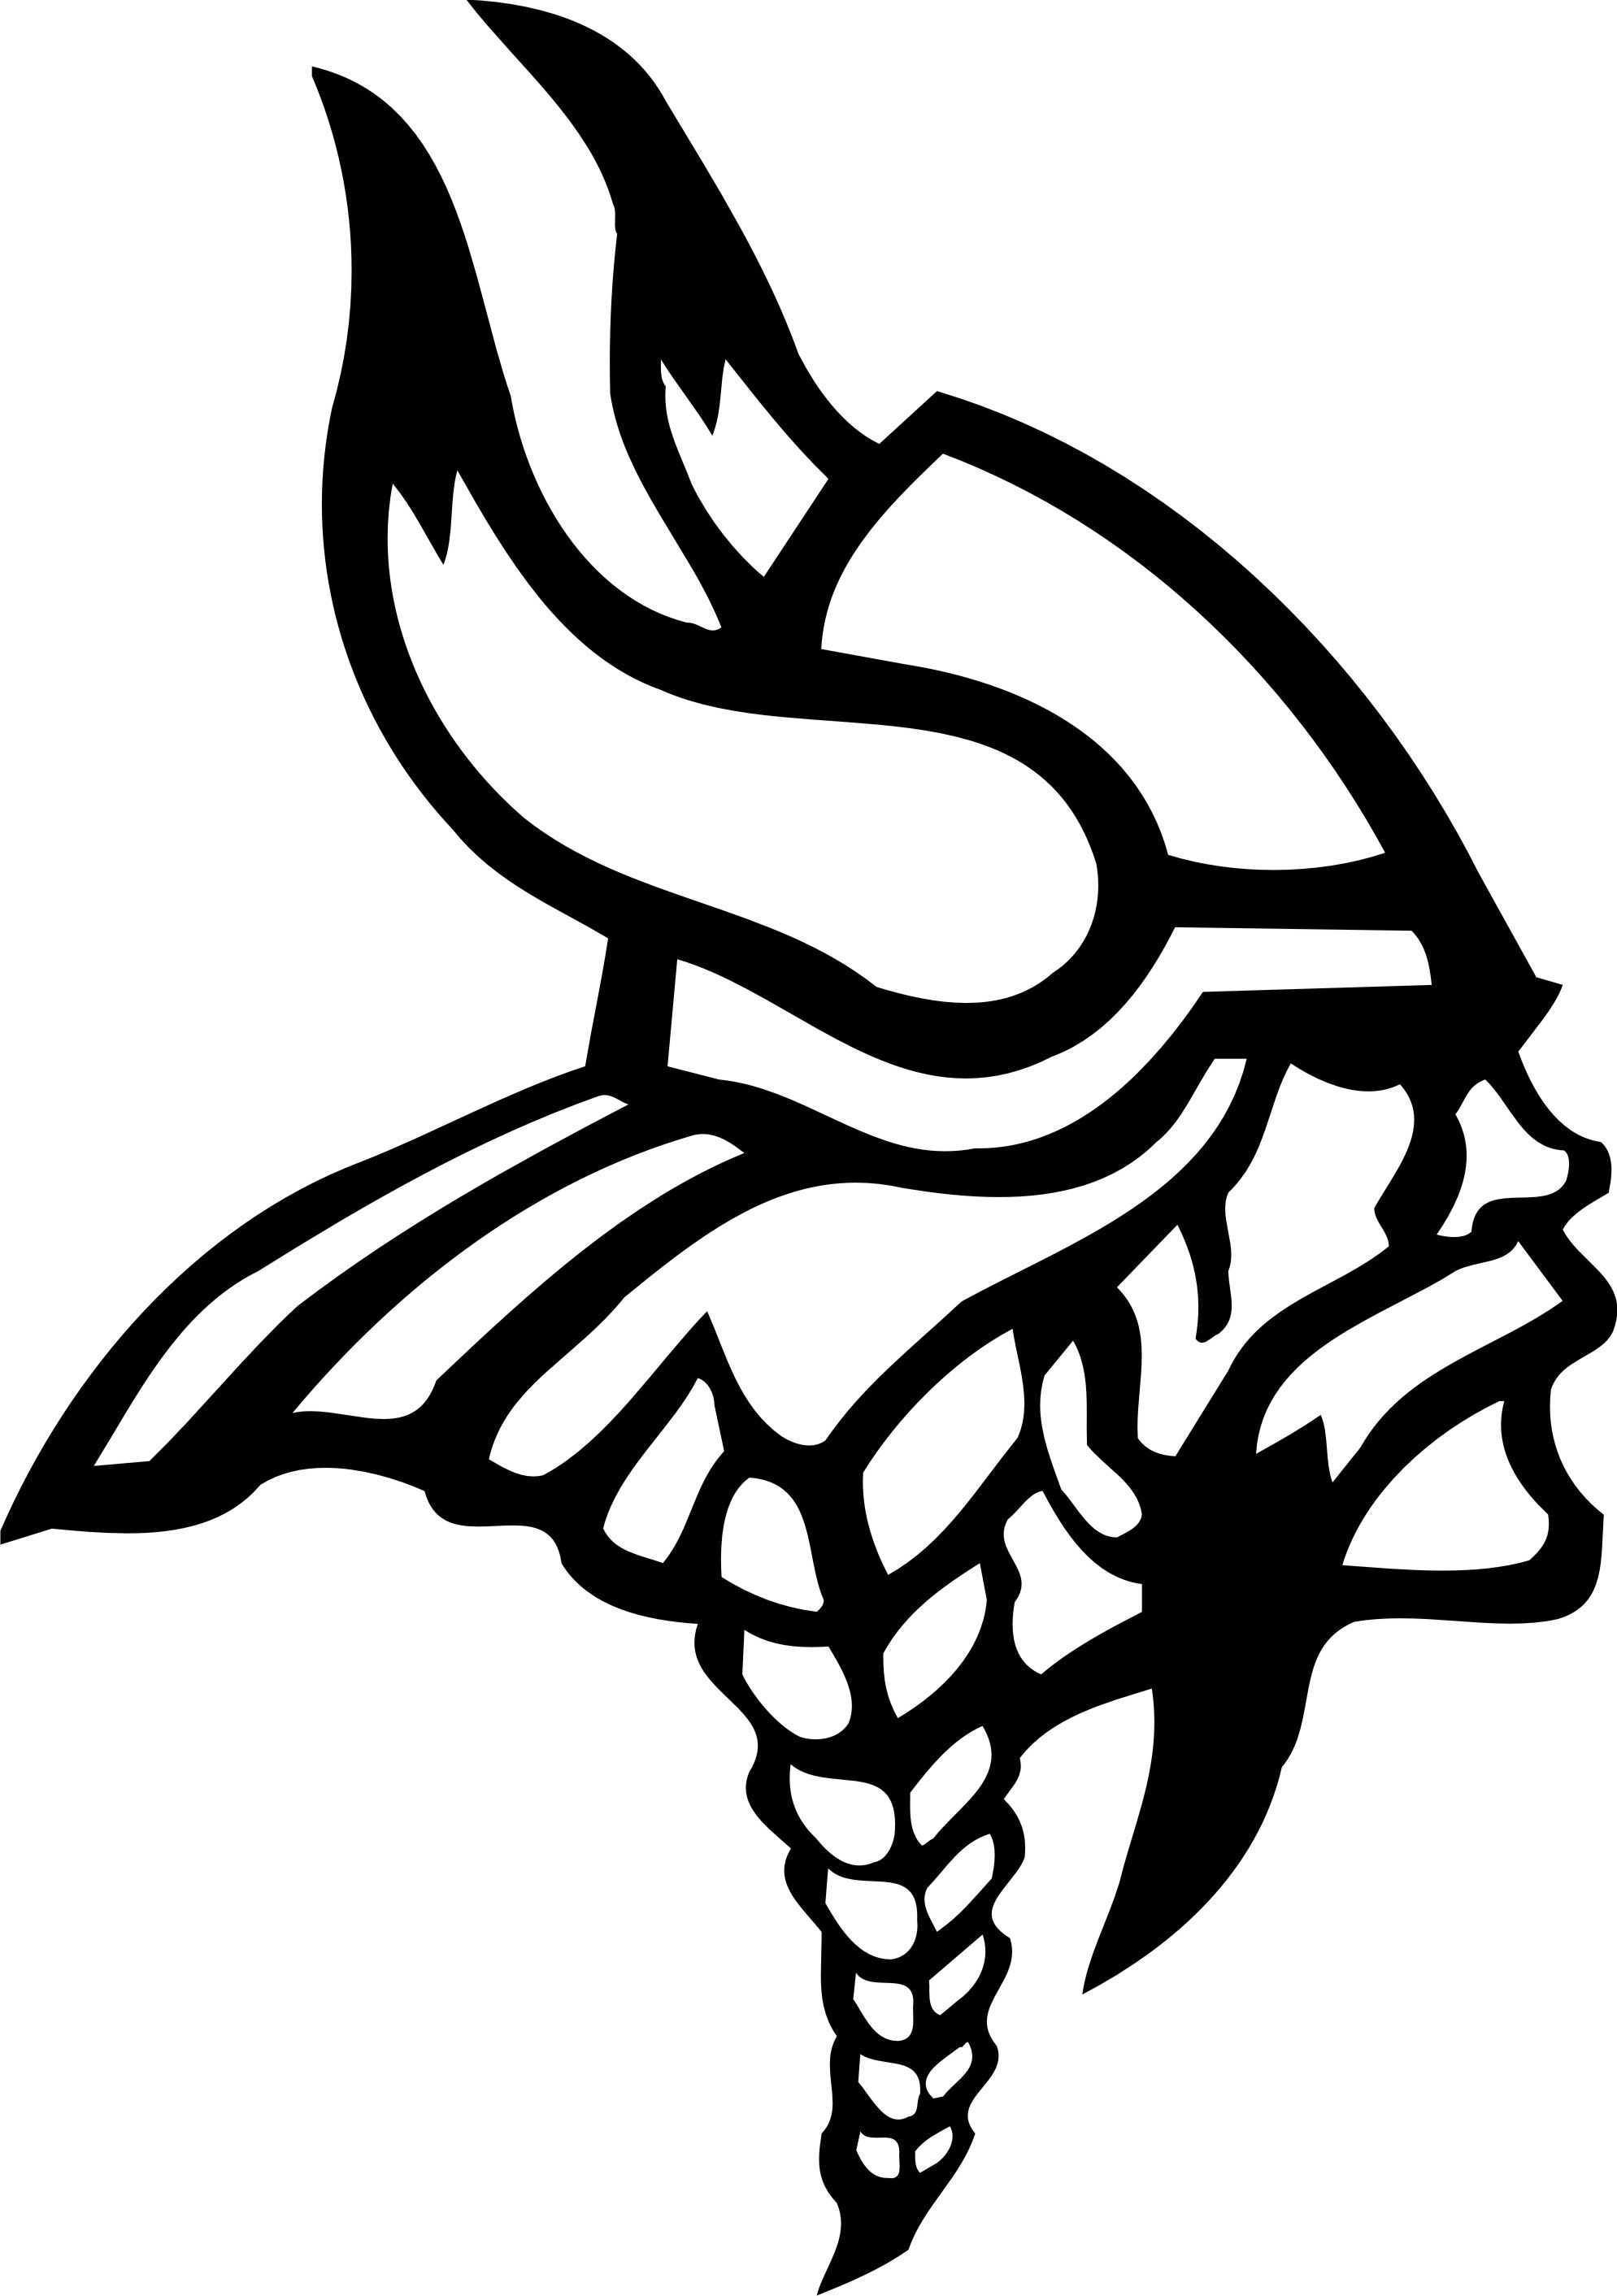 Viking head logo.